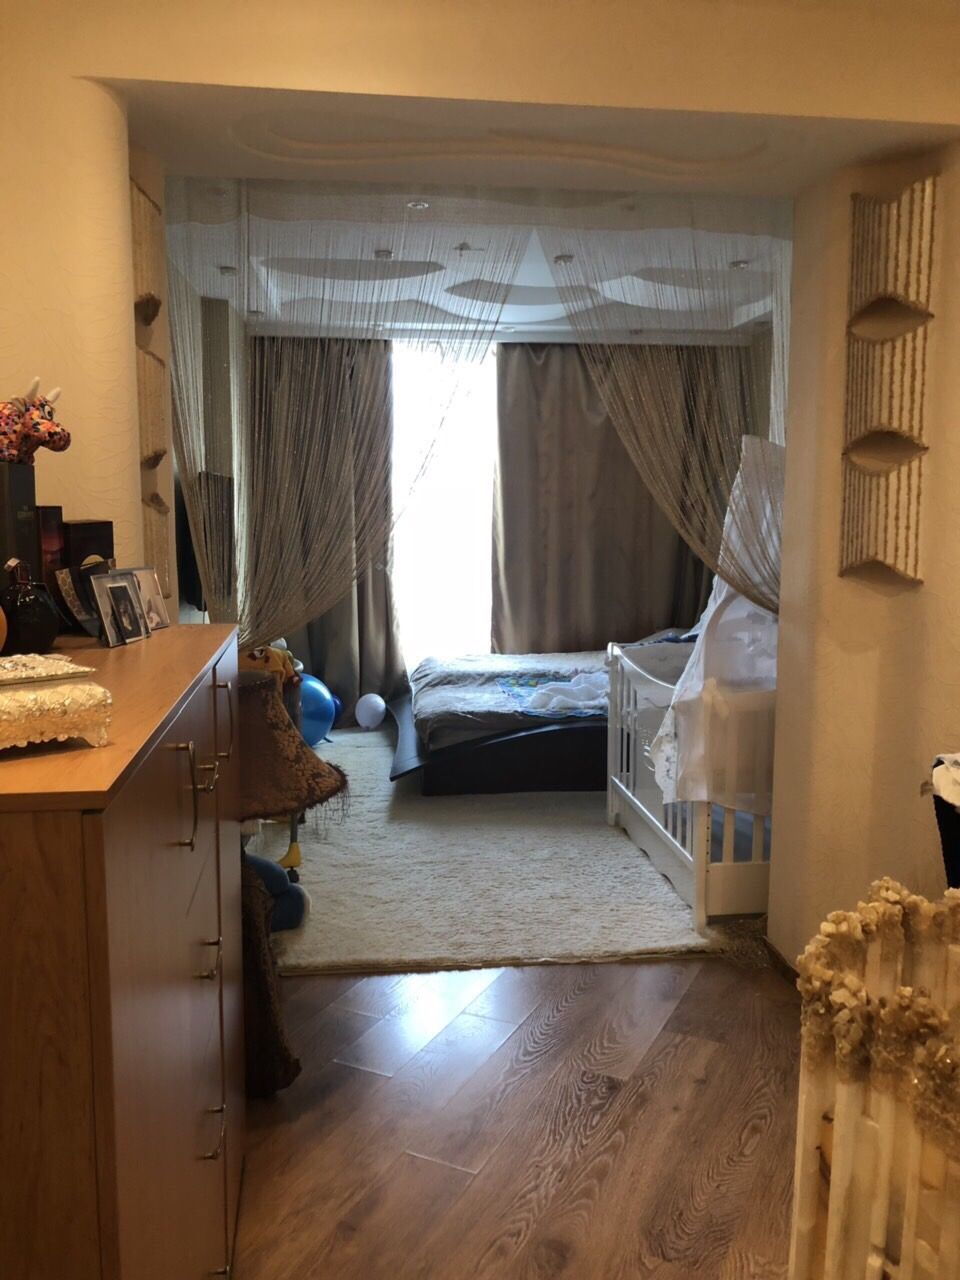 Таирова, ул. Тополева, 3-х комнатная квартира с ремонтом